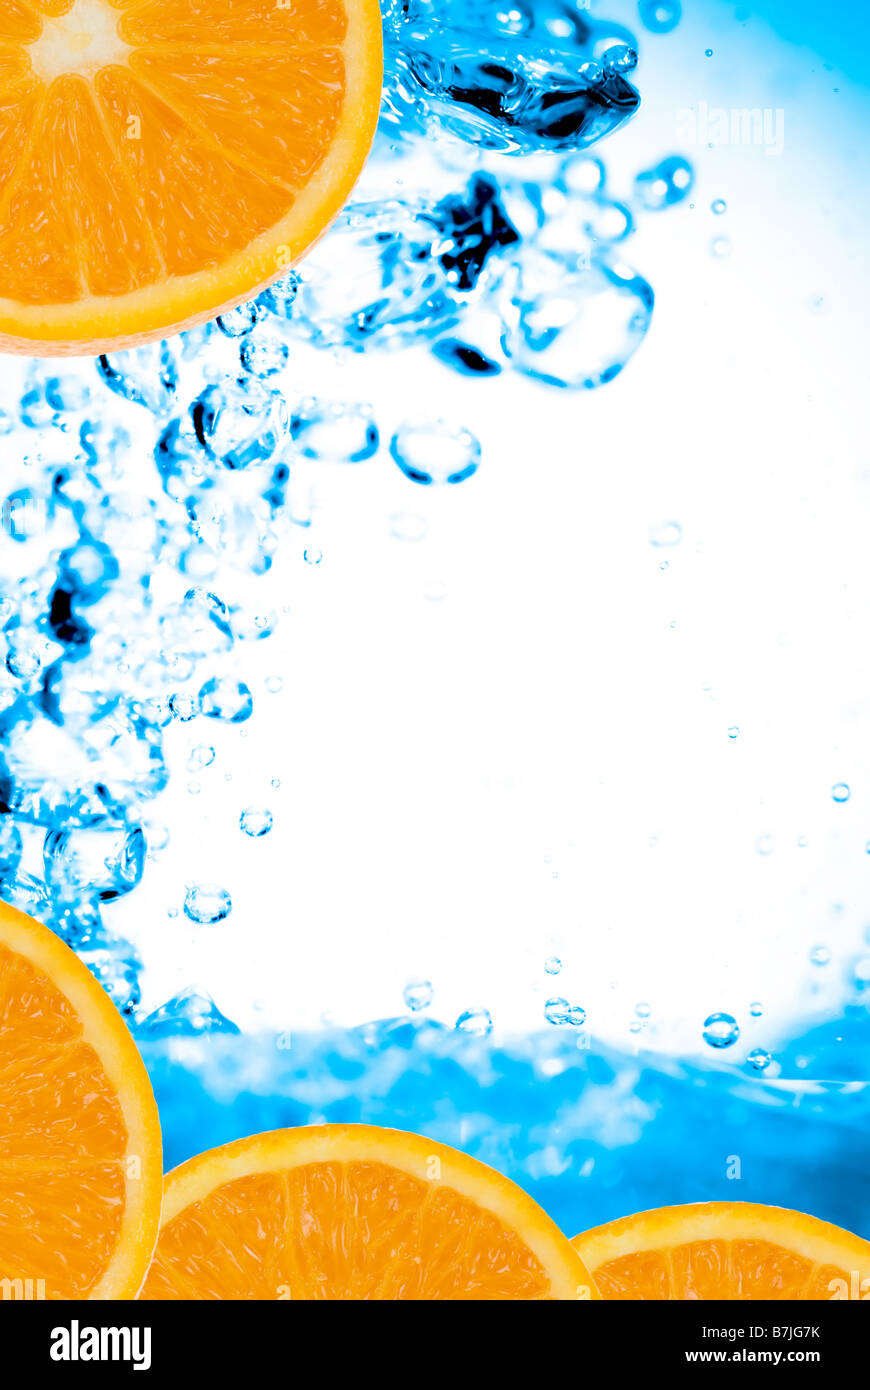 fresh oranges and splashing water Stock Photo